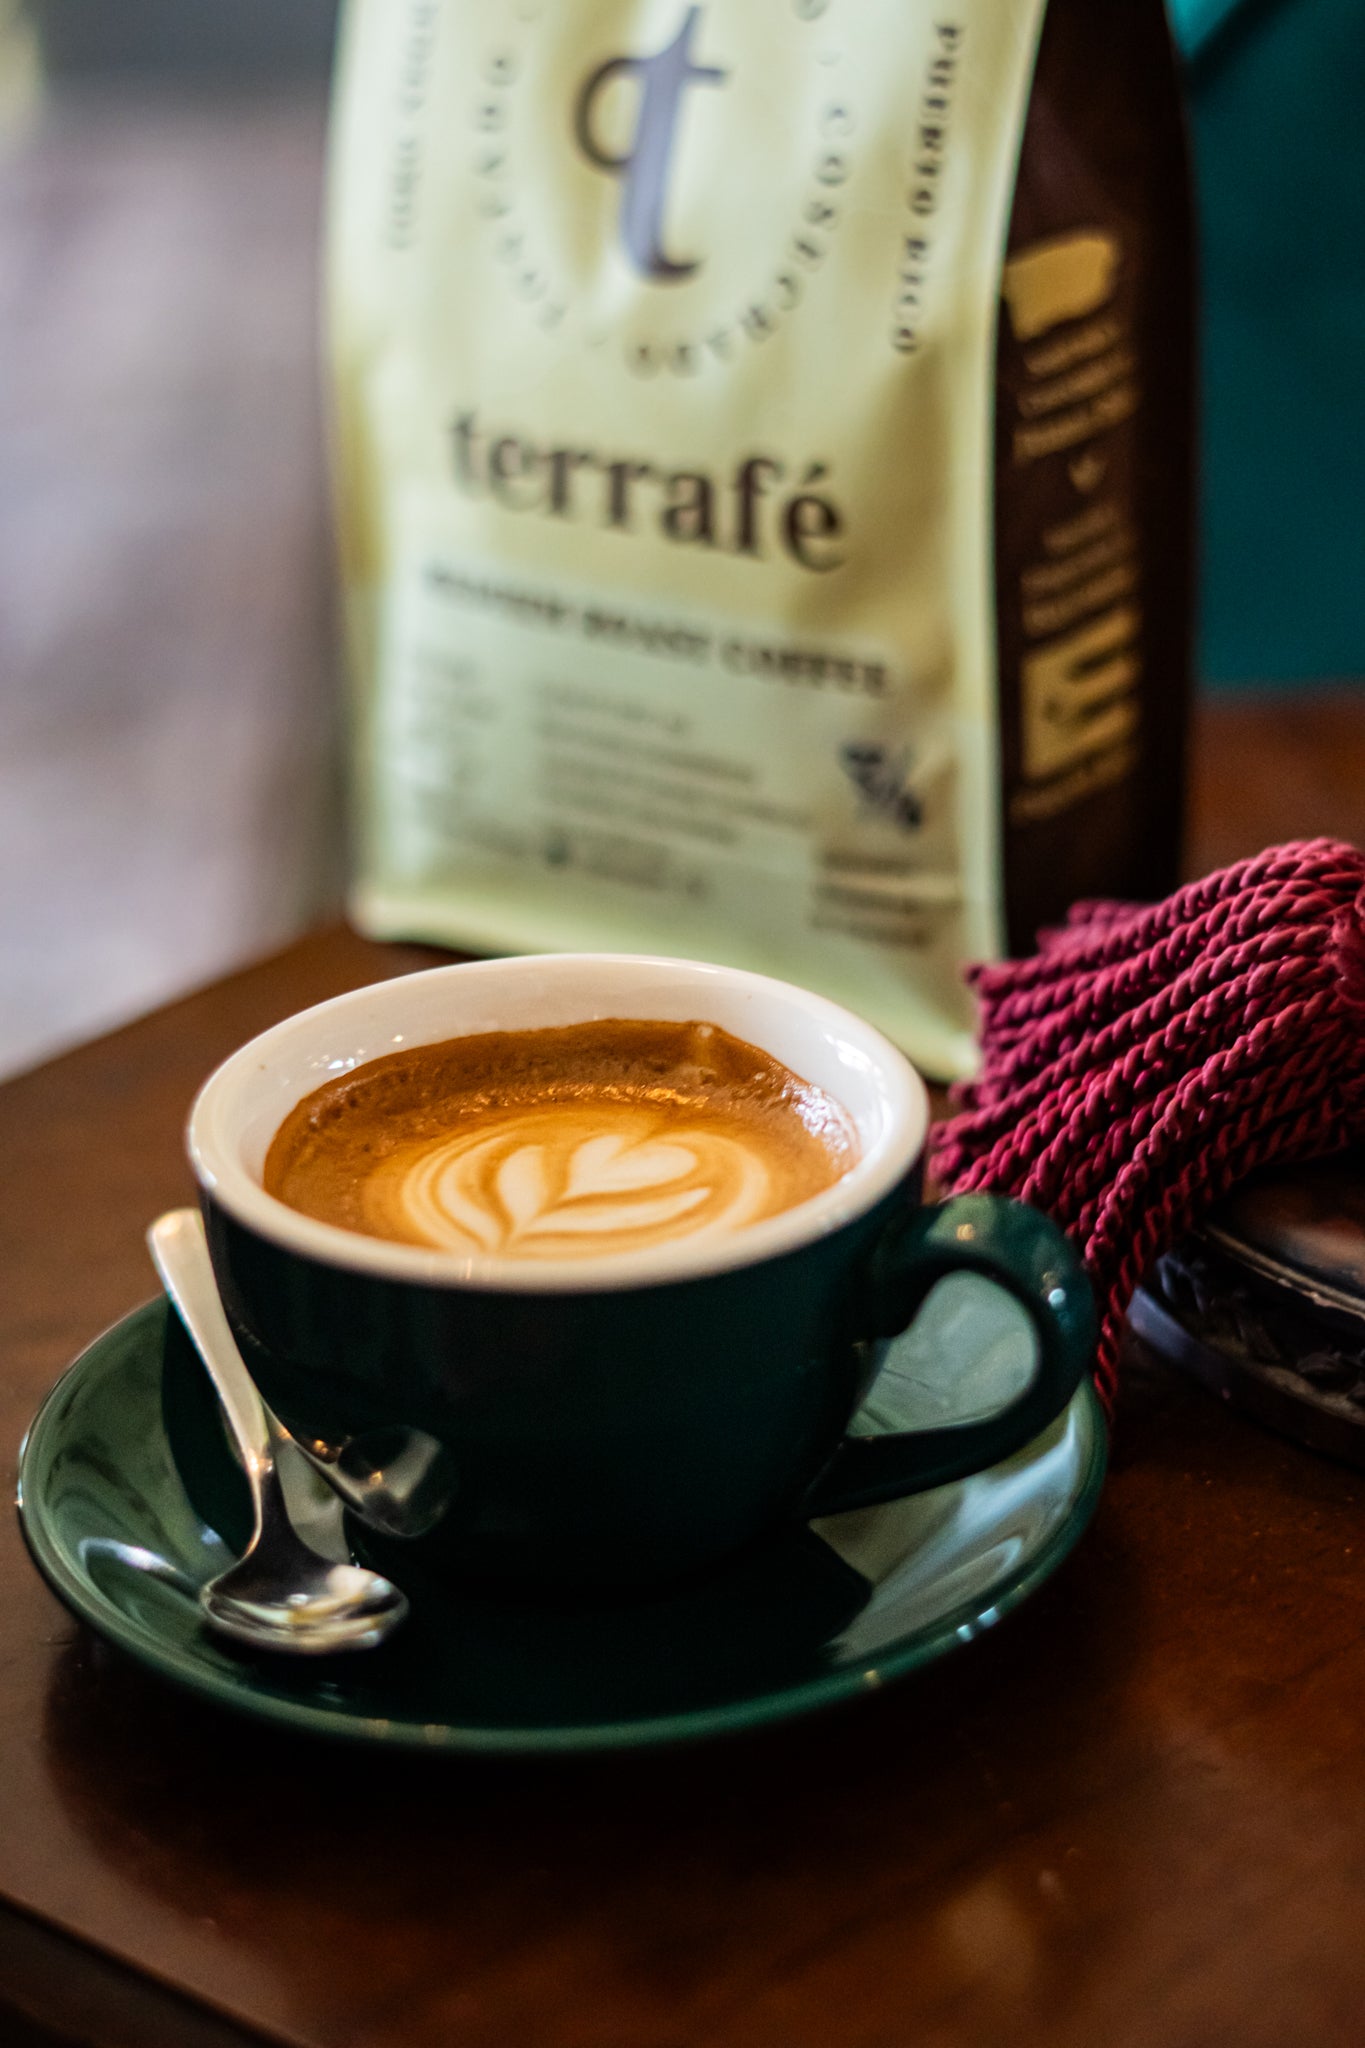 Terrafé Medium Roast Coffee